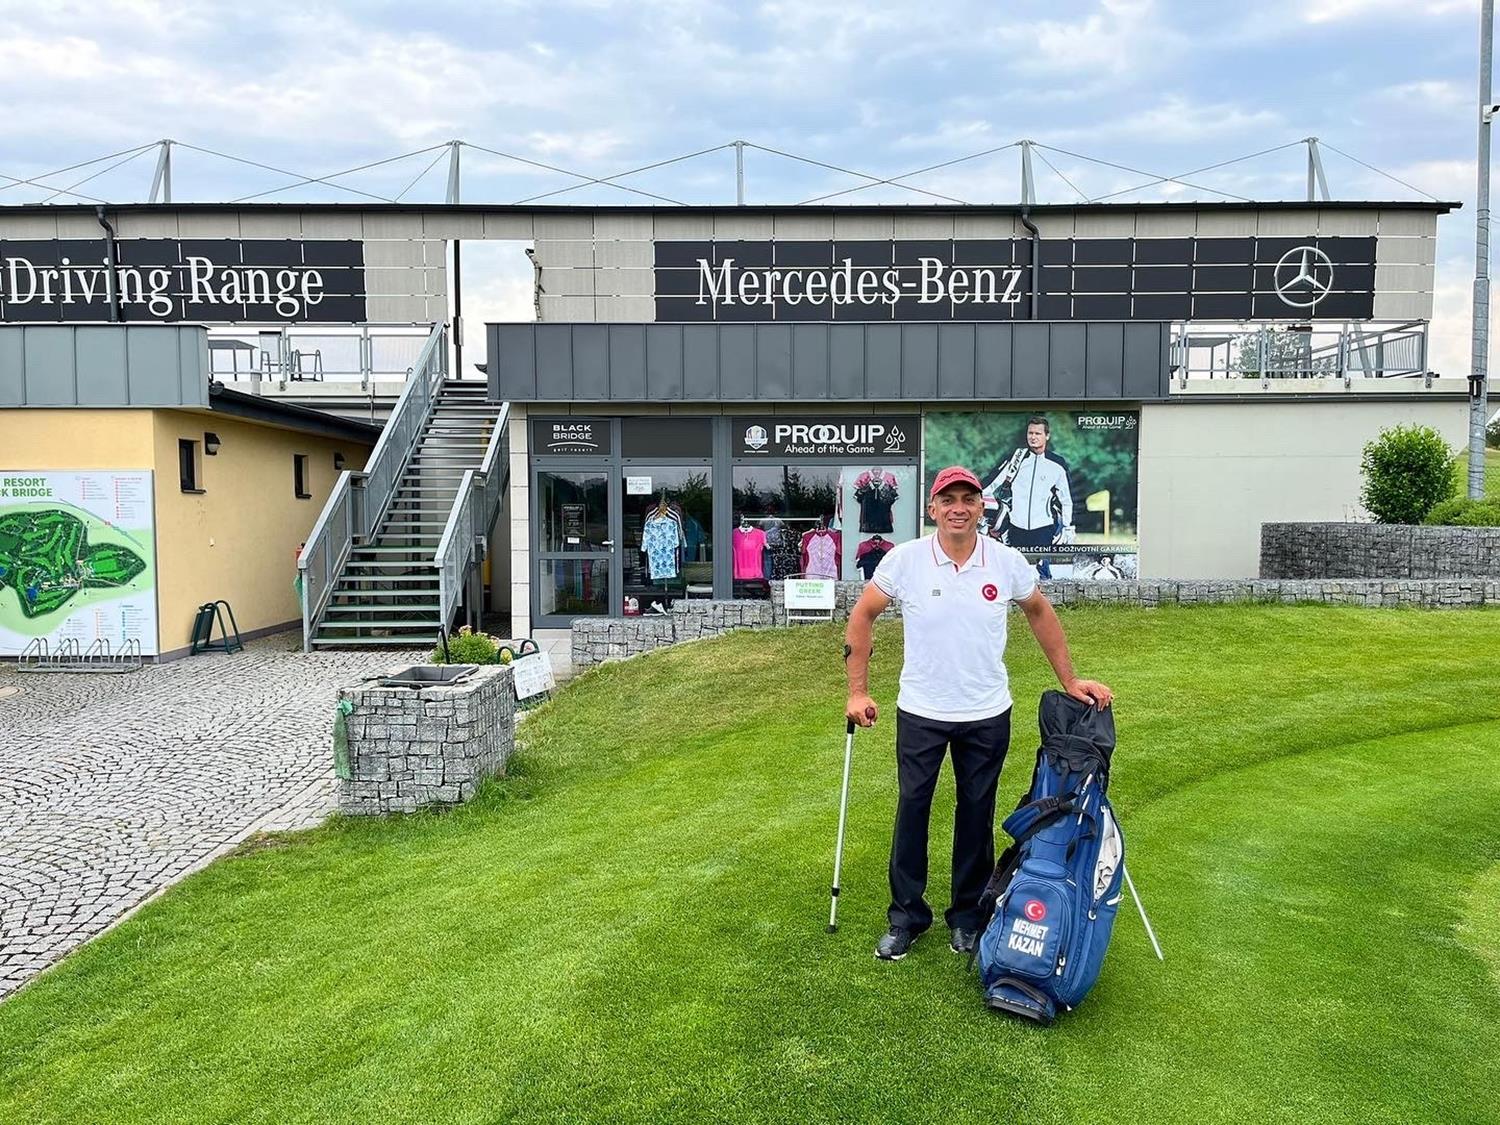 Mehmet Kazan, Czech Disabled Golf Masters 2022'de ilk gn lider tamamlad